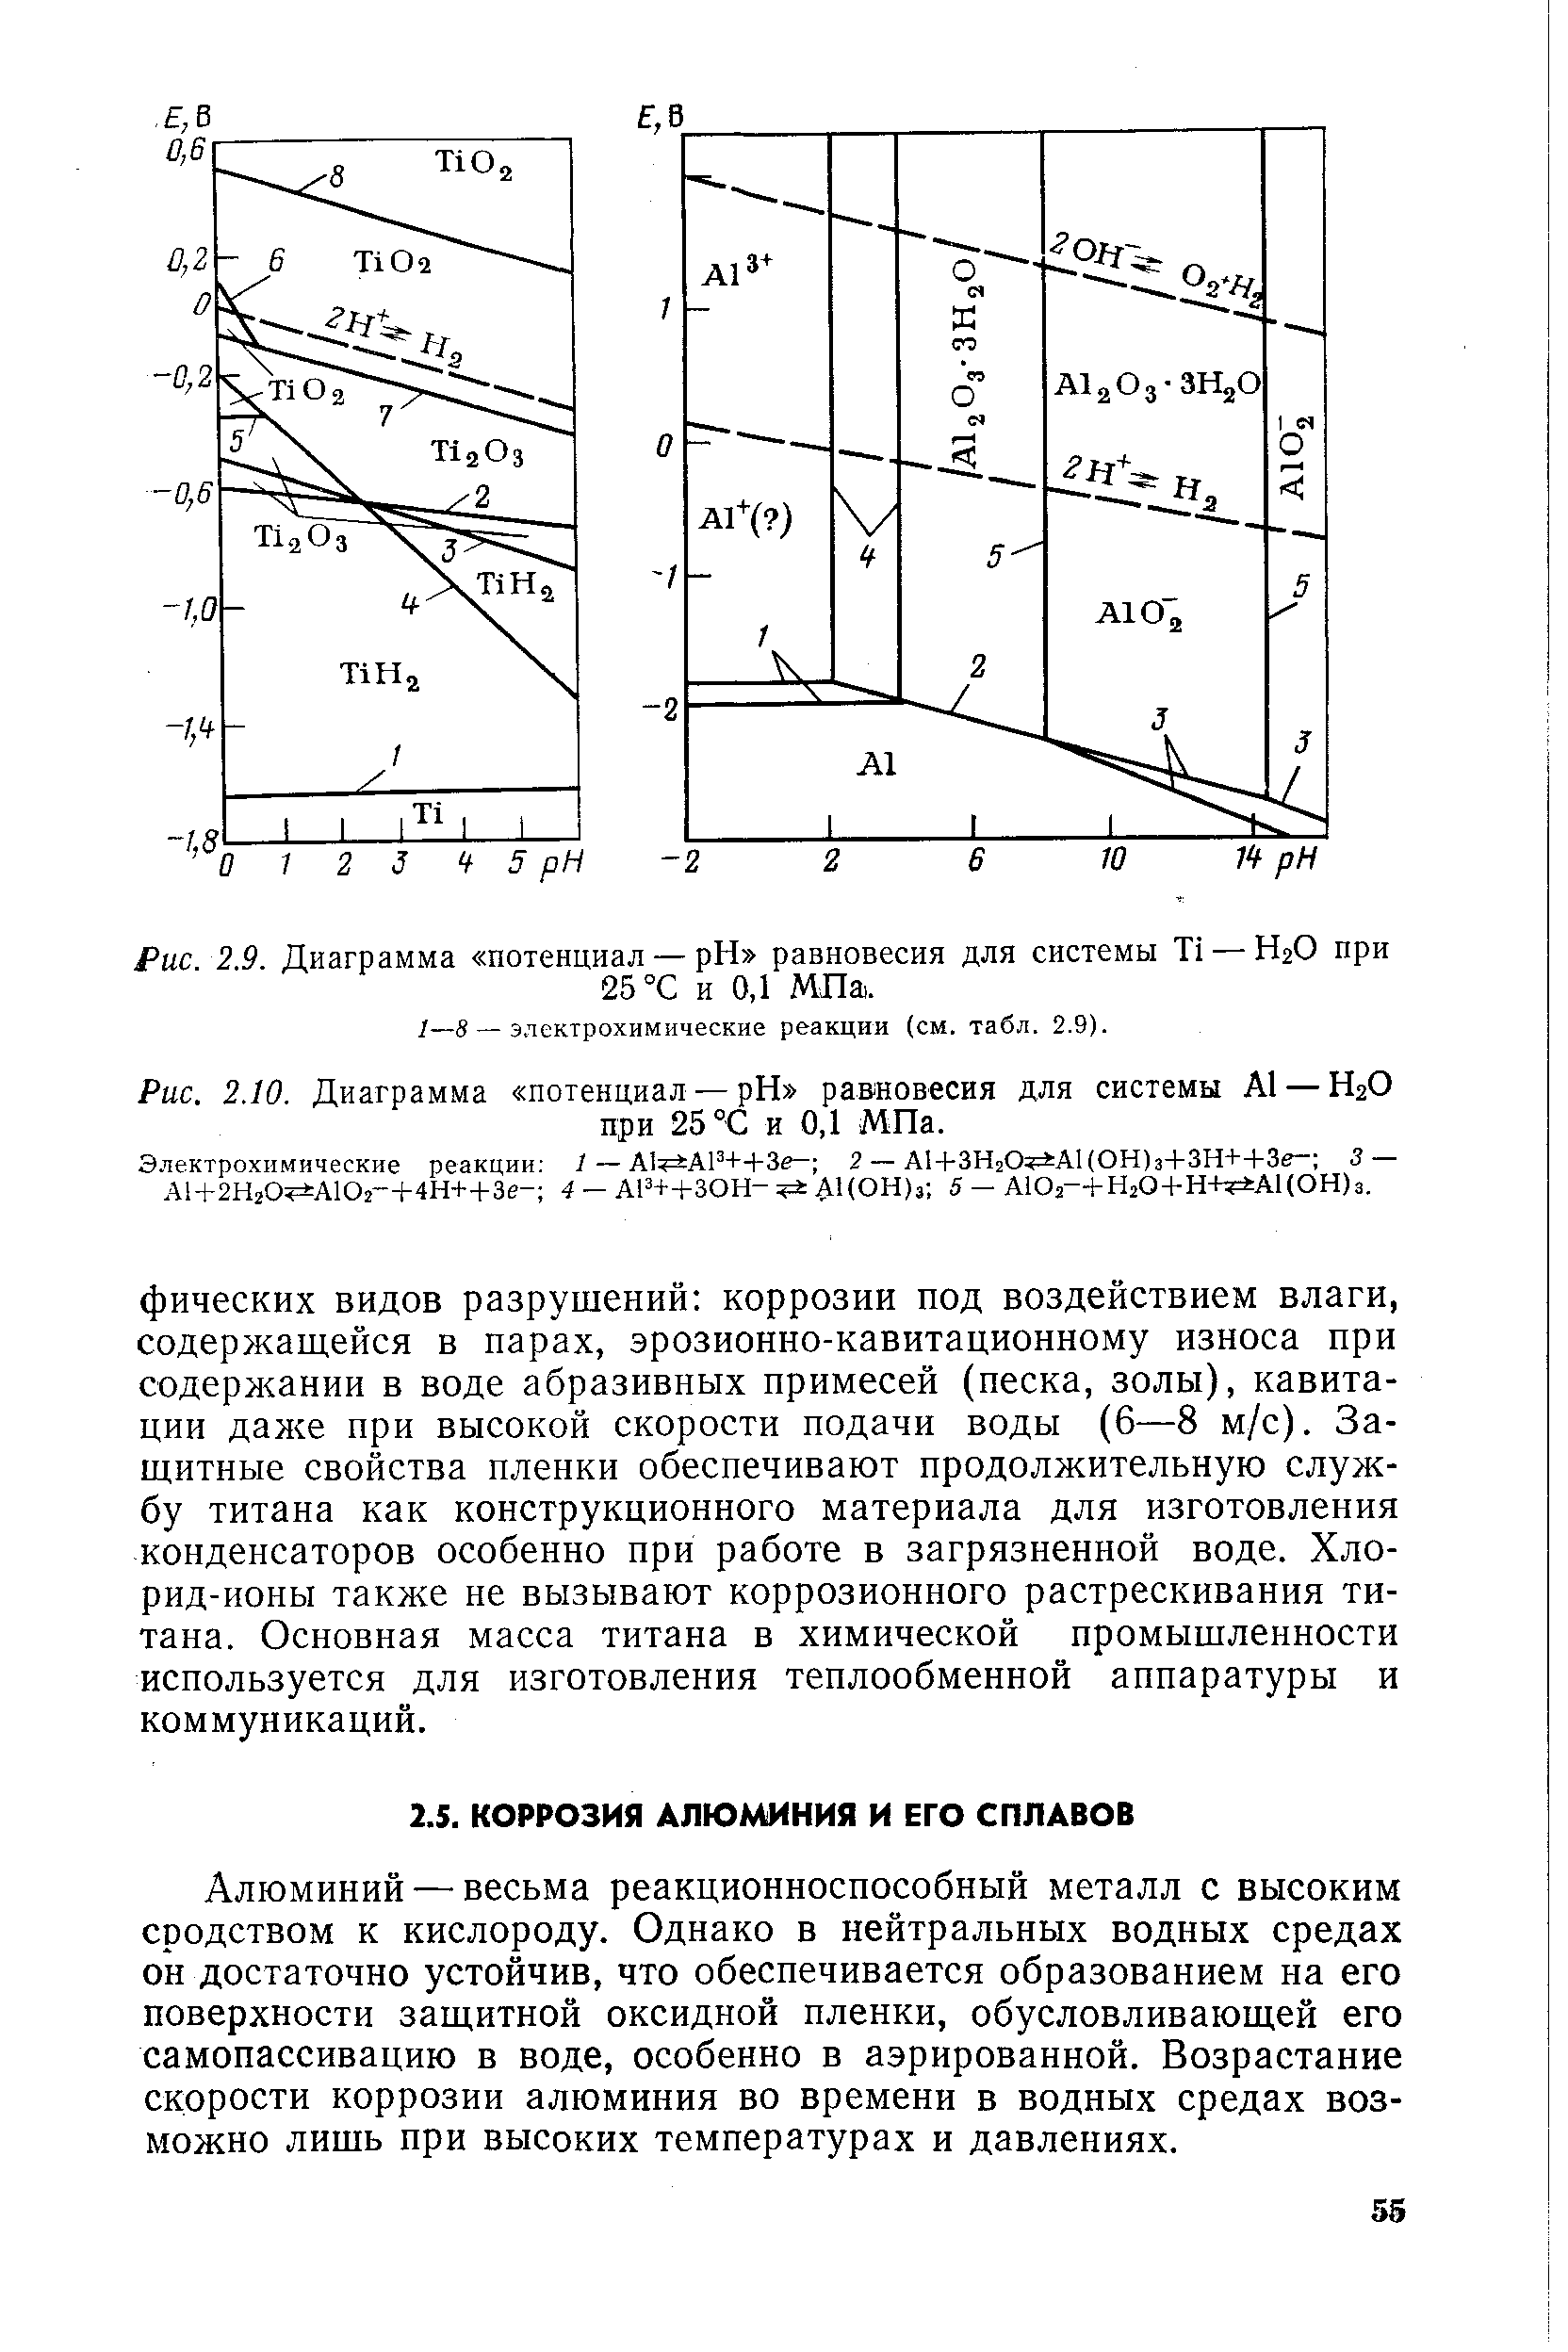 Рис. 2.10. Диаграмма потенциал — pH равновесия для системы А1 — Н2О
